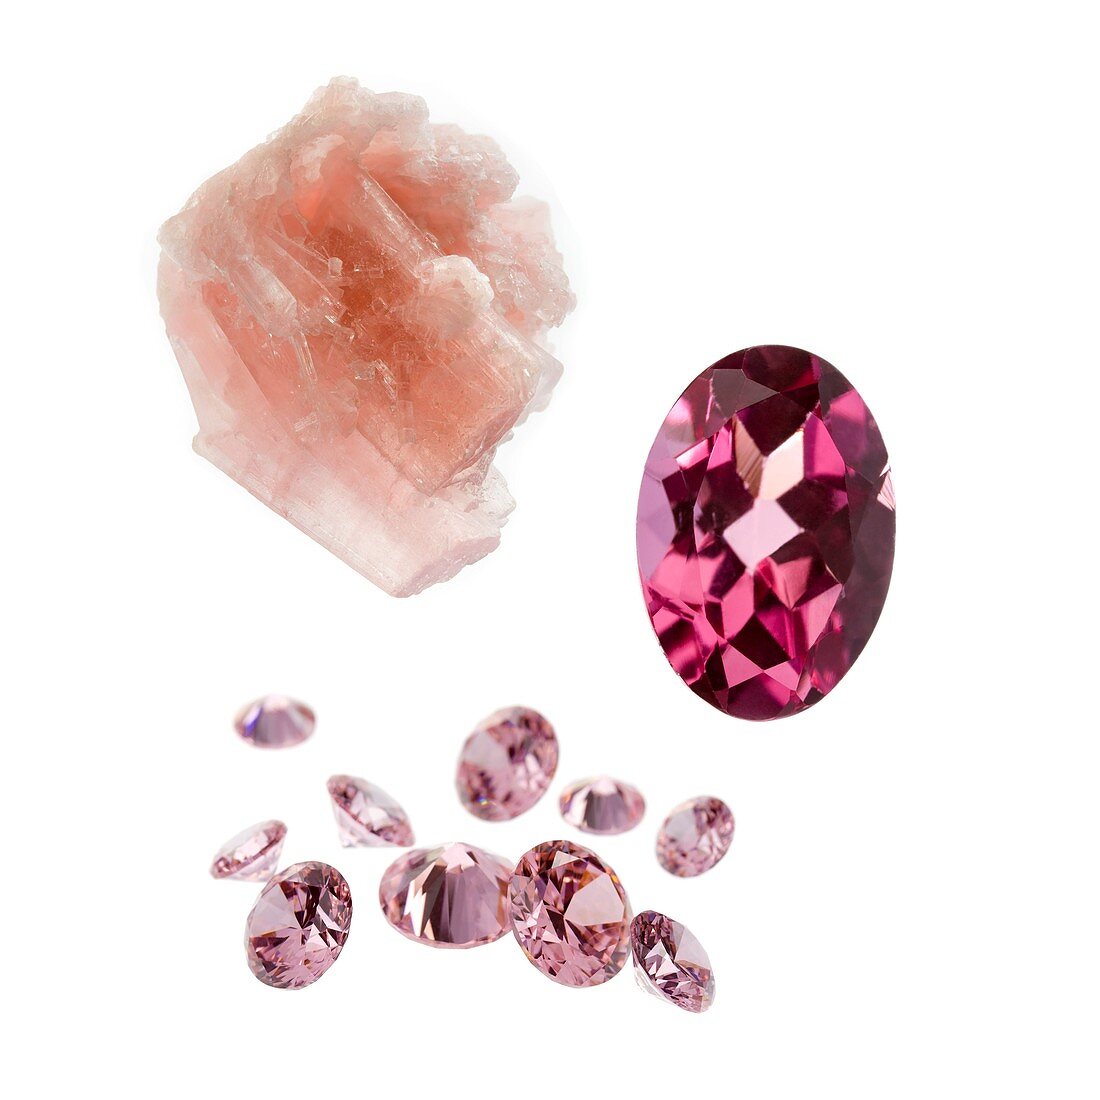 Tourmaline gemstones and crystal